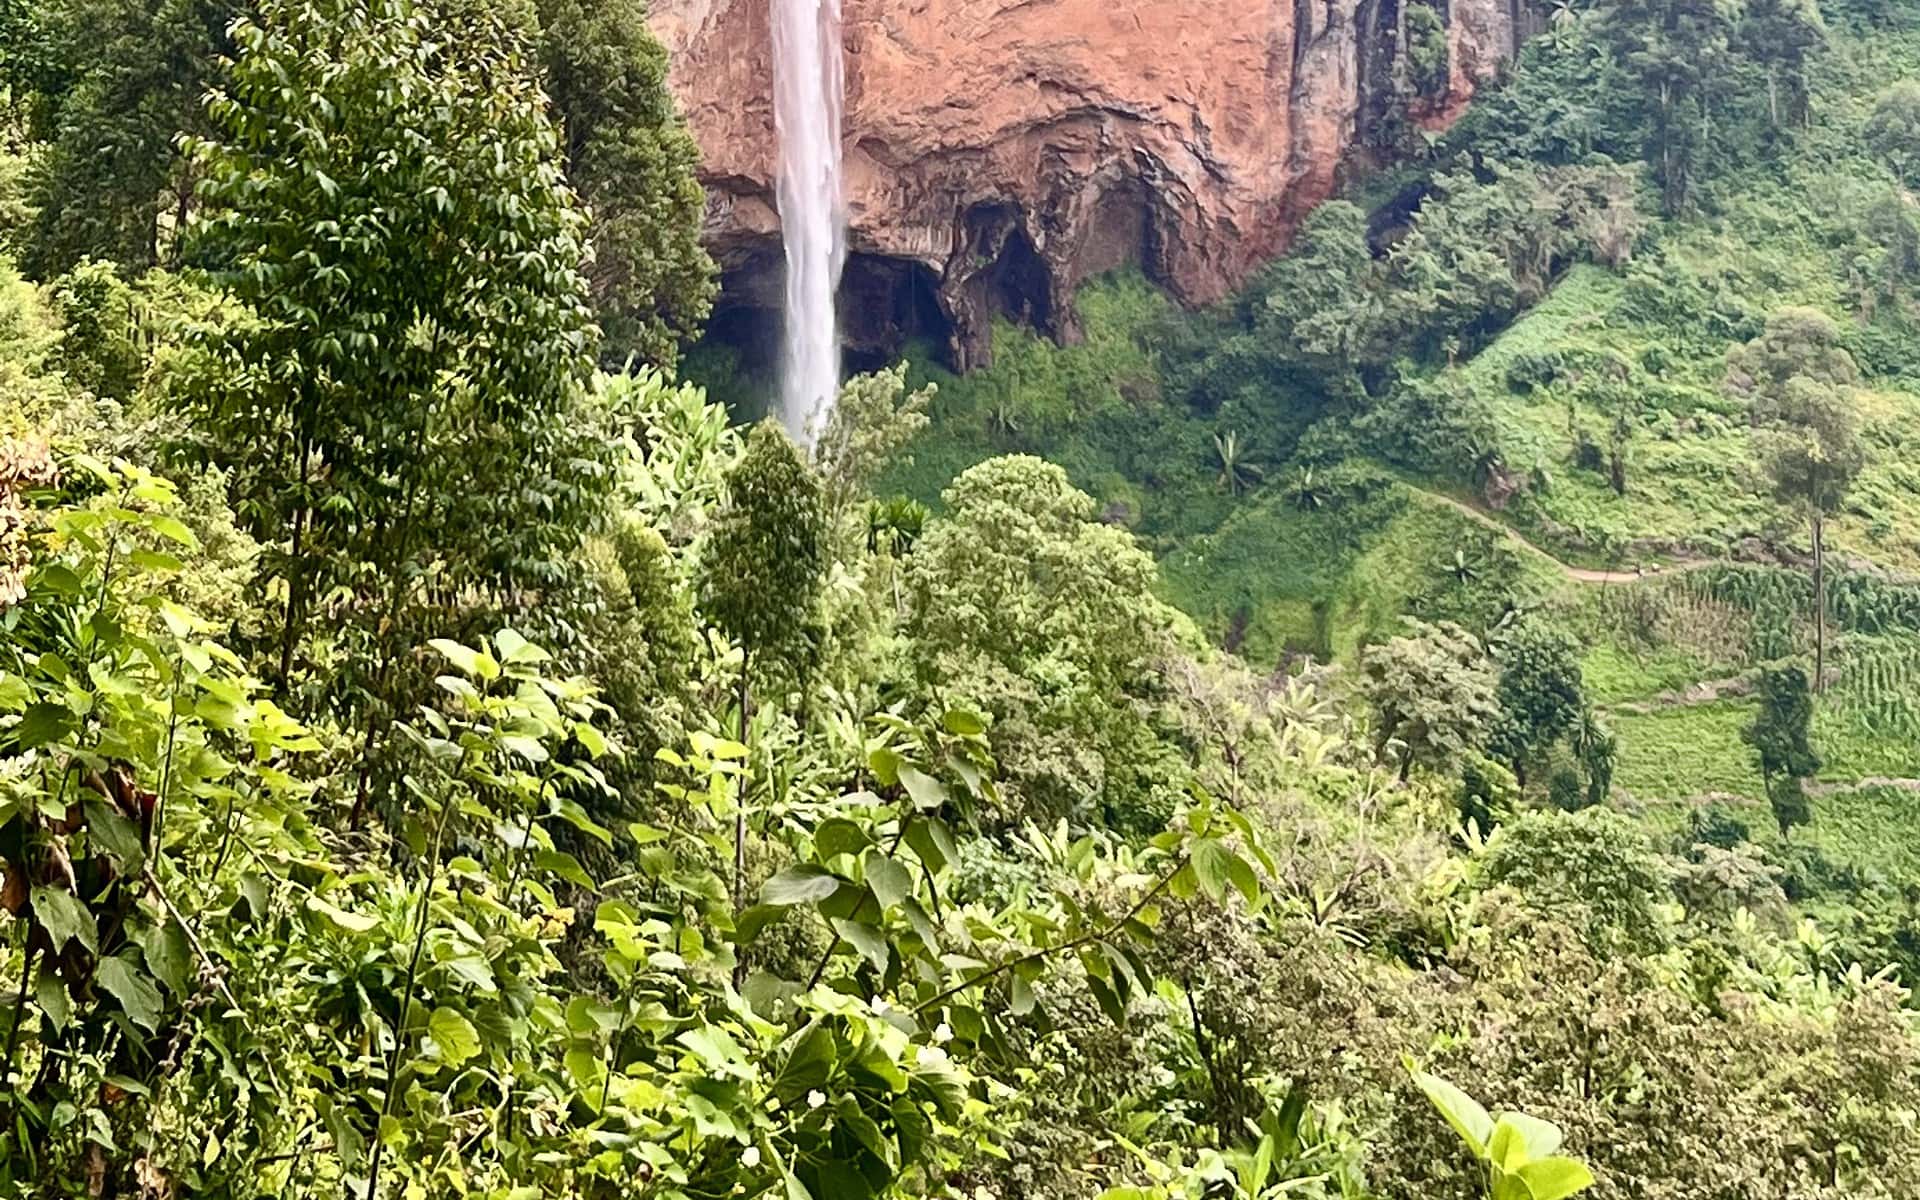 Sipi Falls - the main waterfall